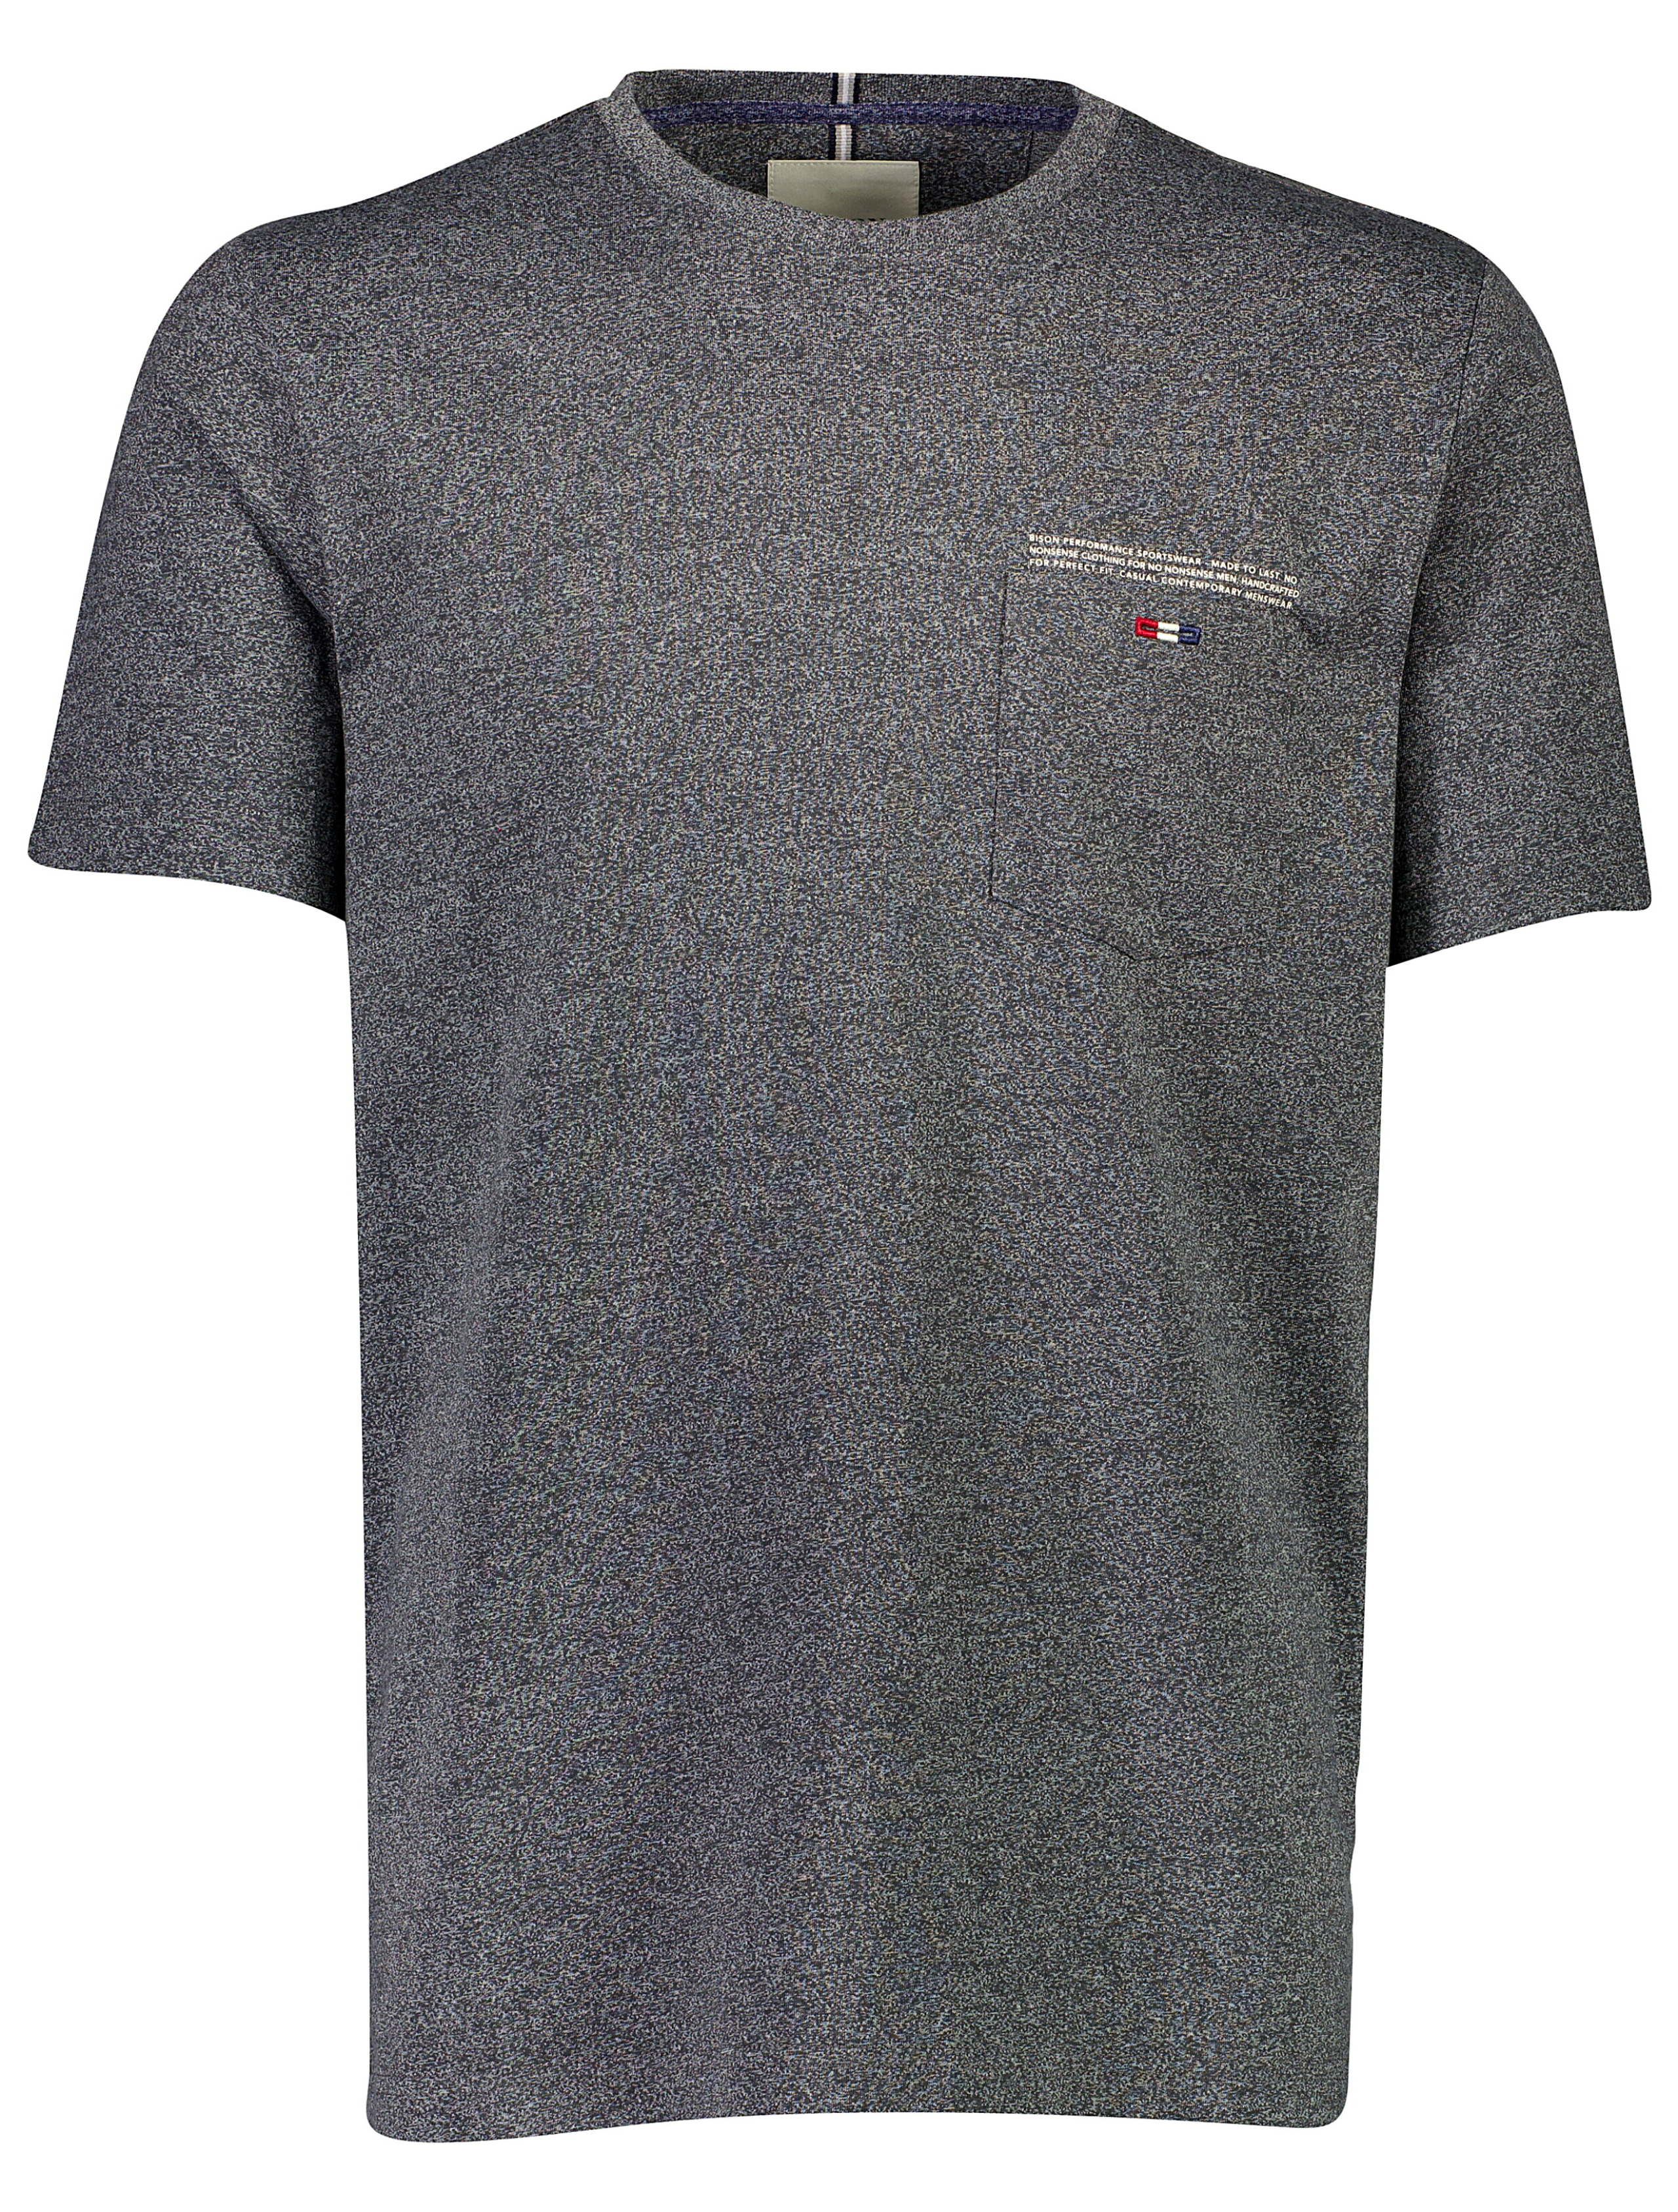 Bison T-shirt grå / dk grey